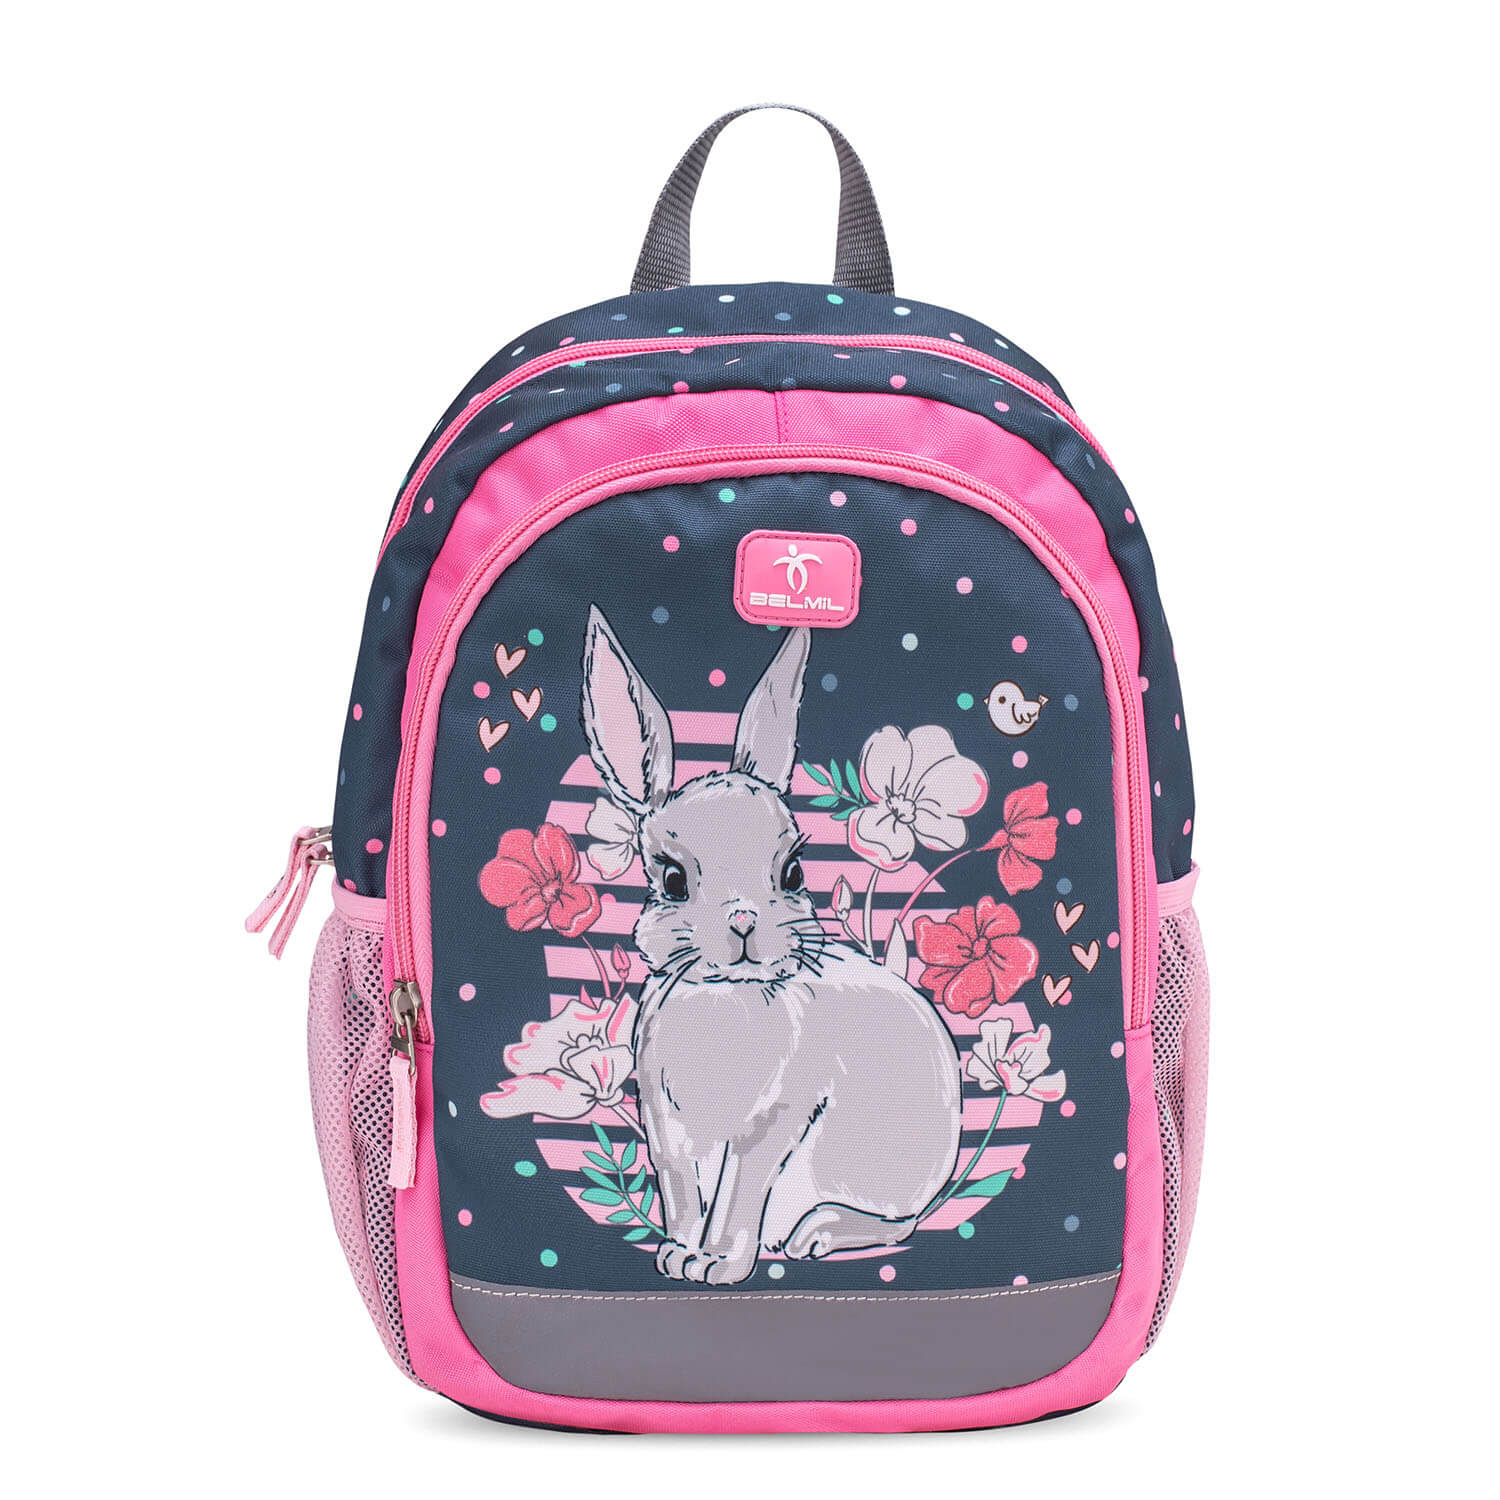 Kiddy Plus Bunny Kindergarten Bag with GRATIS Storage box